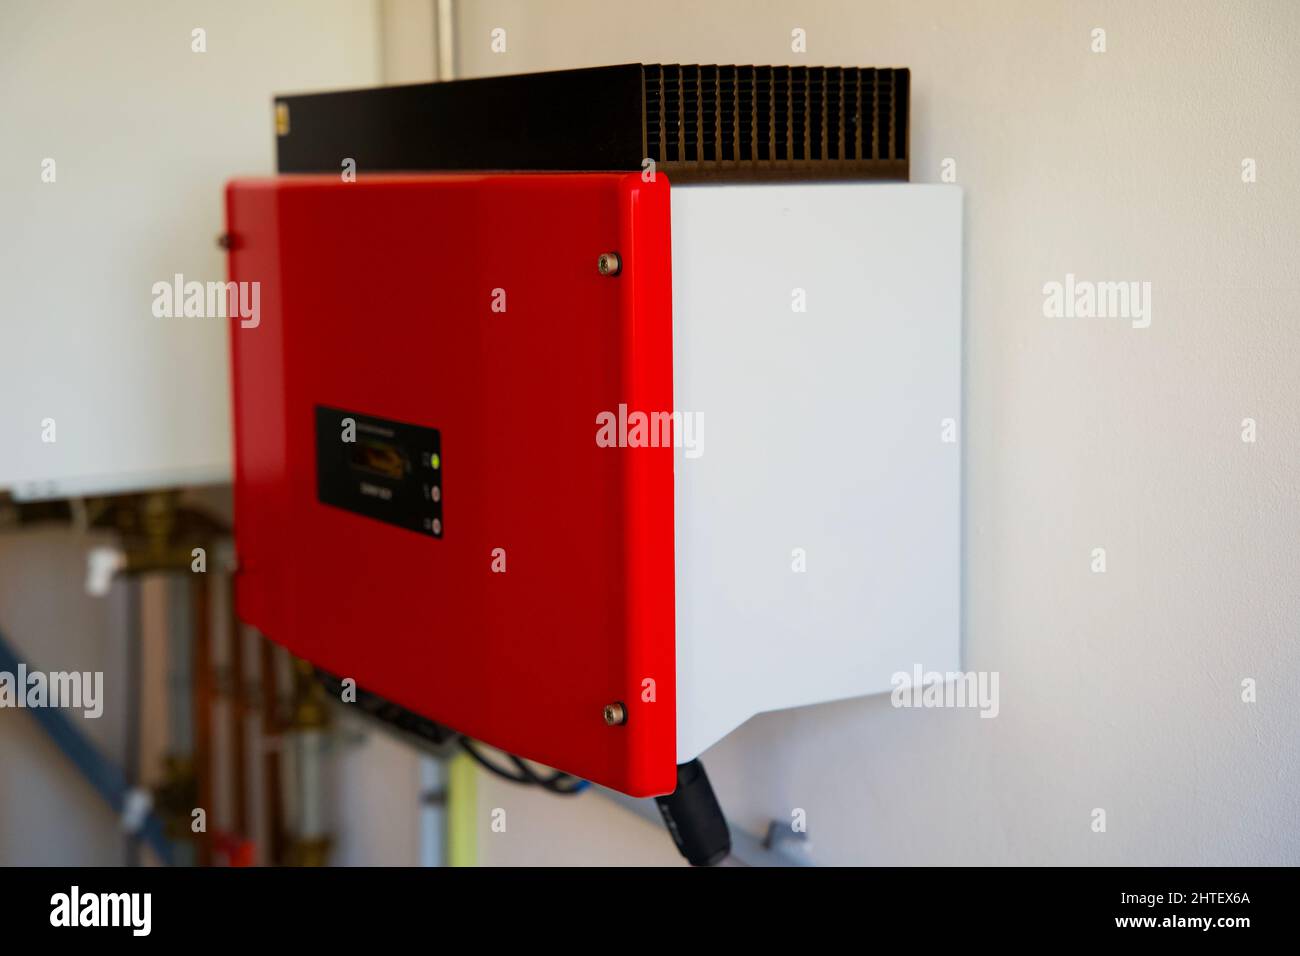 Inverter for solar energy into 230V electrical grid Stock Photo